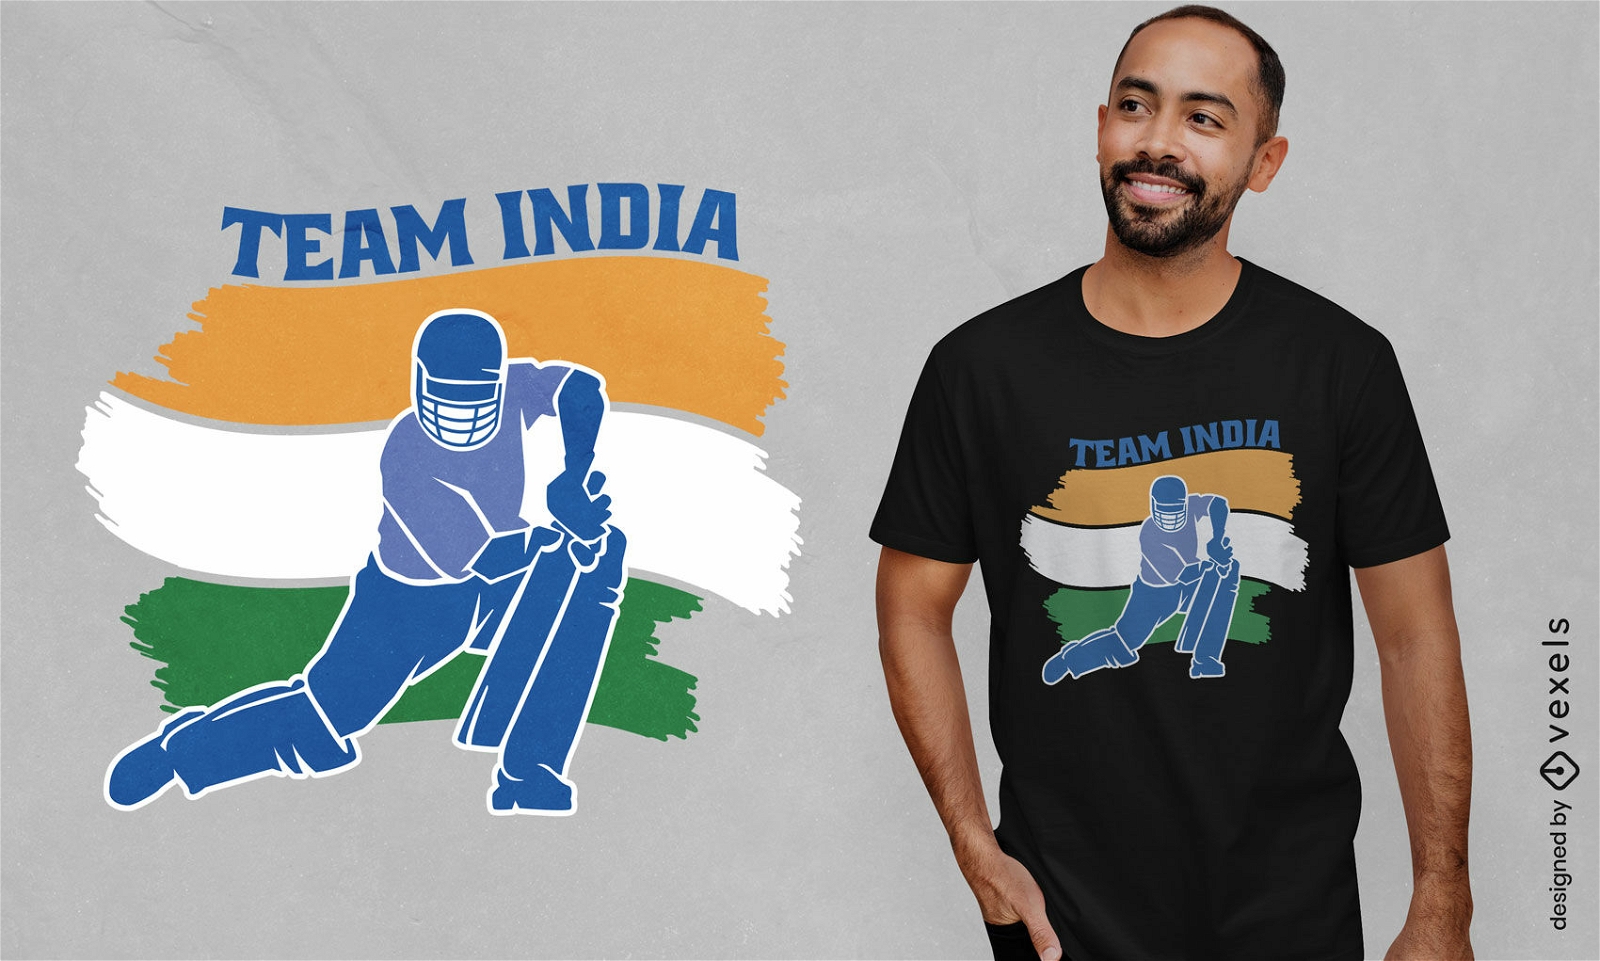 Dise?o de camiseta de deporte de criquet del equipo india